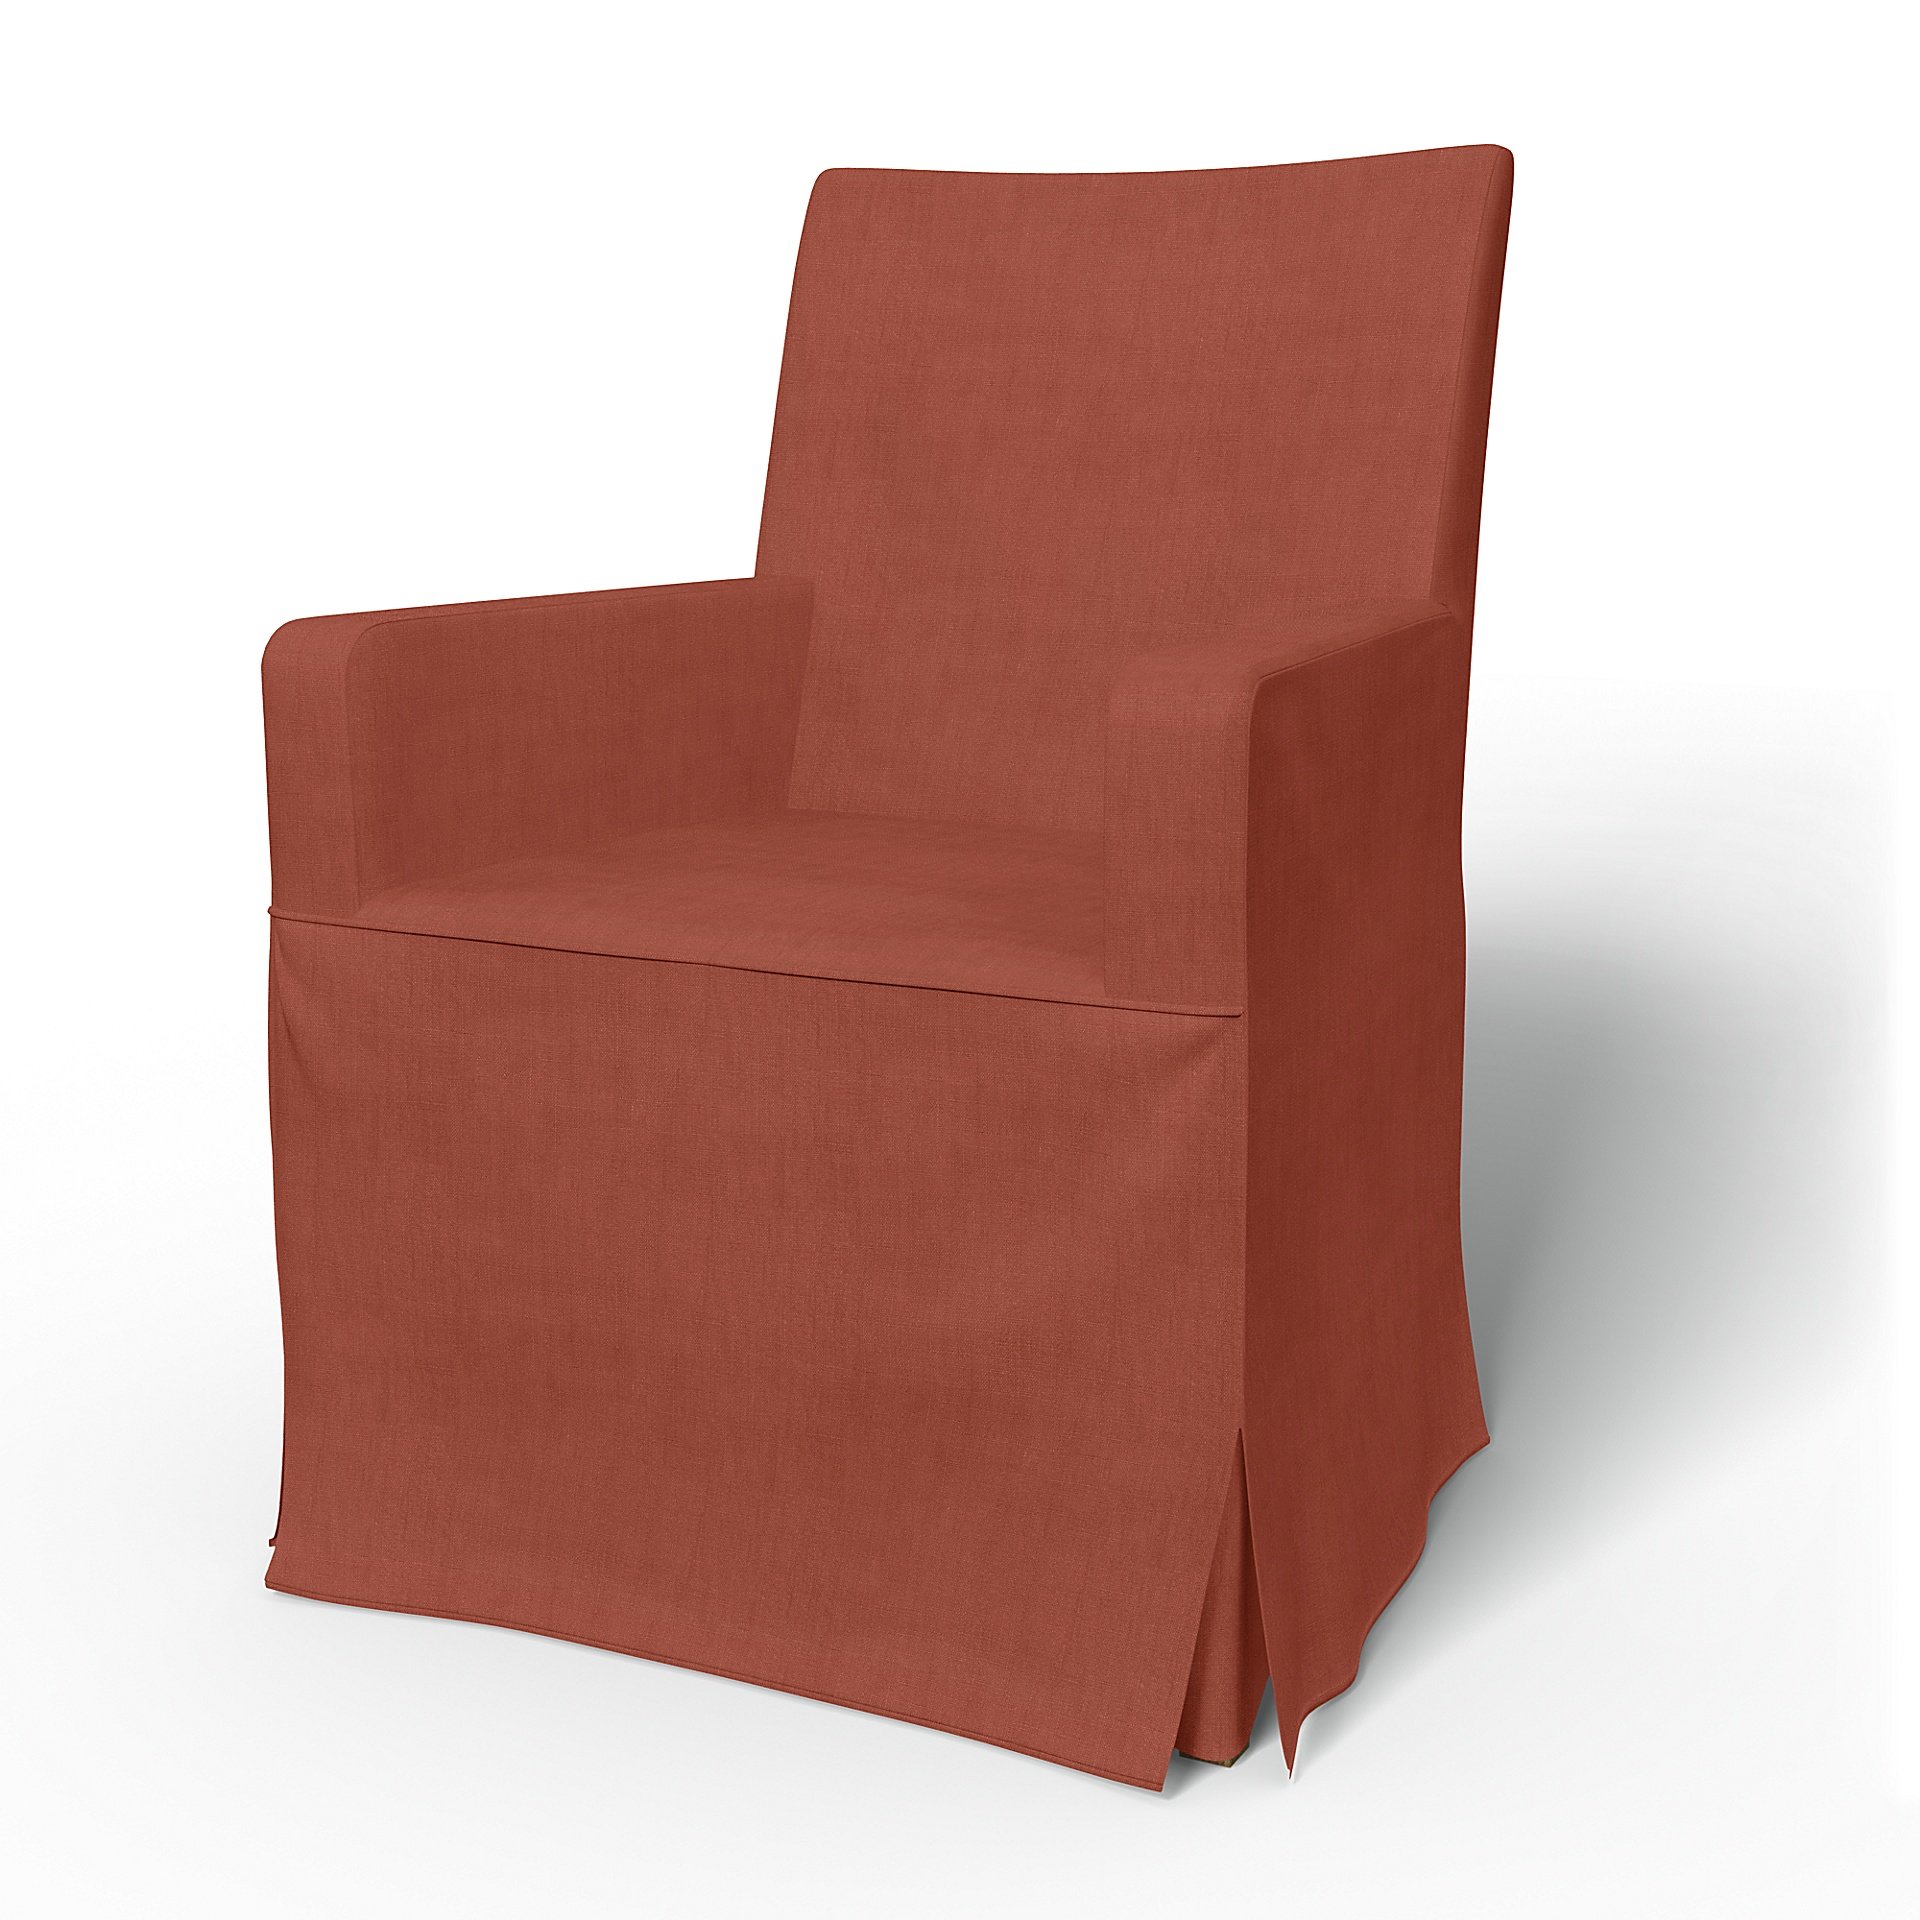 IKEA - Henriksdal, Chair cover w/ armrests, long skirt box pleat, Terracotta, Linen - Bemz